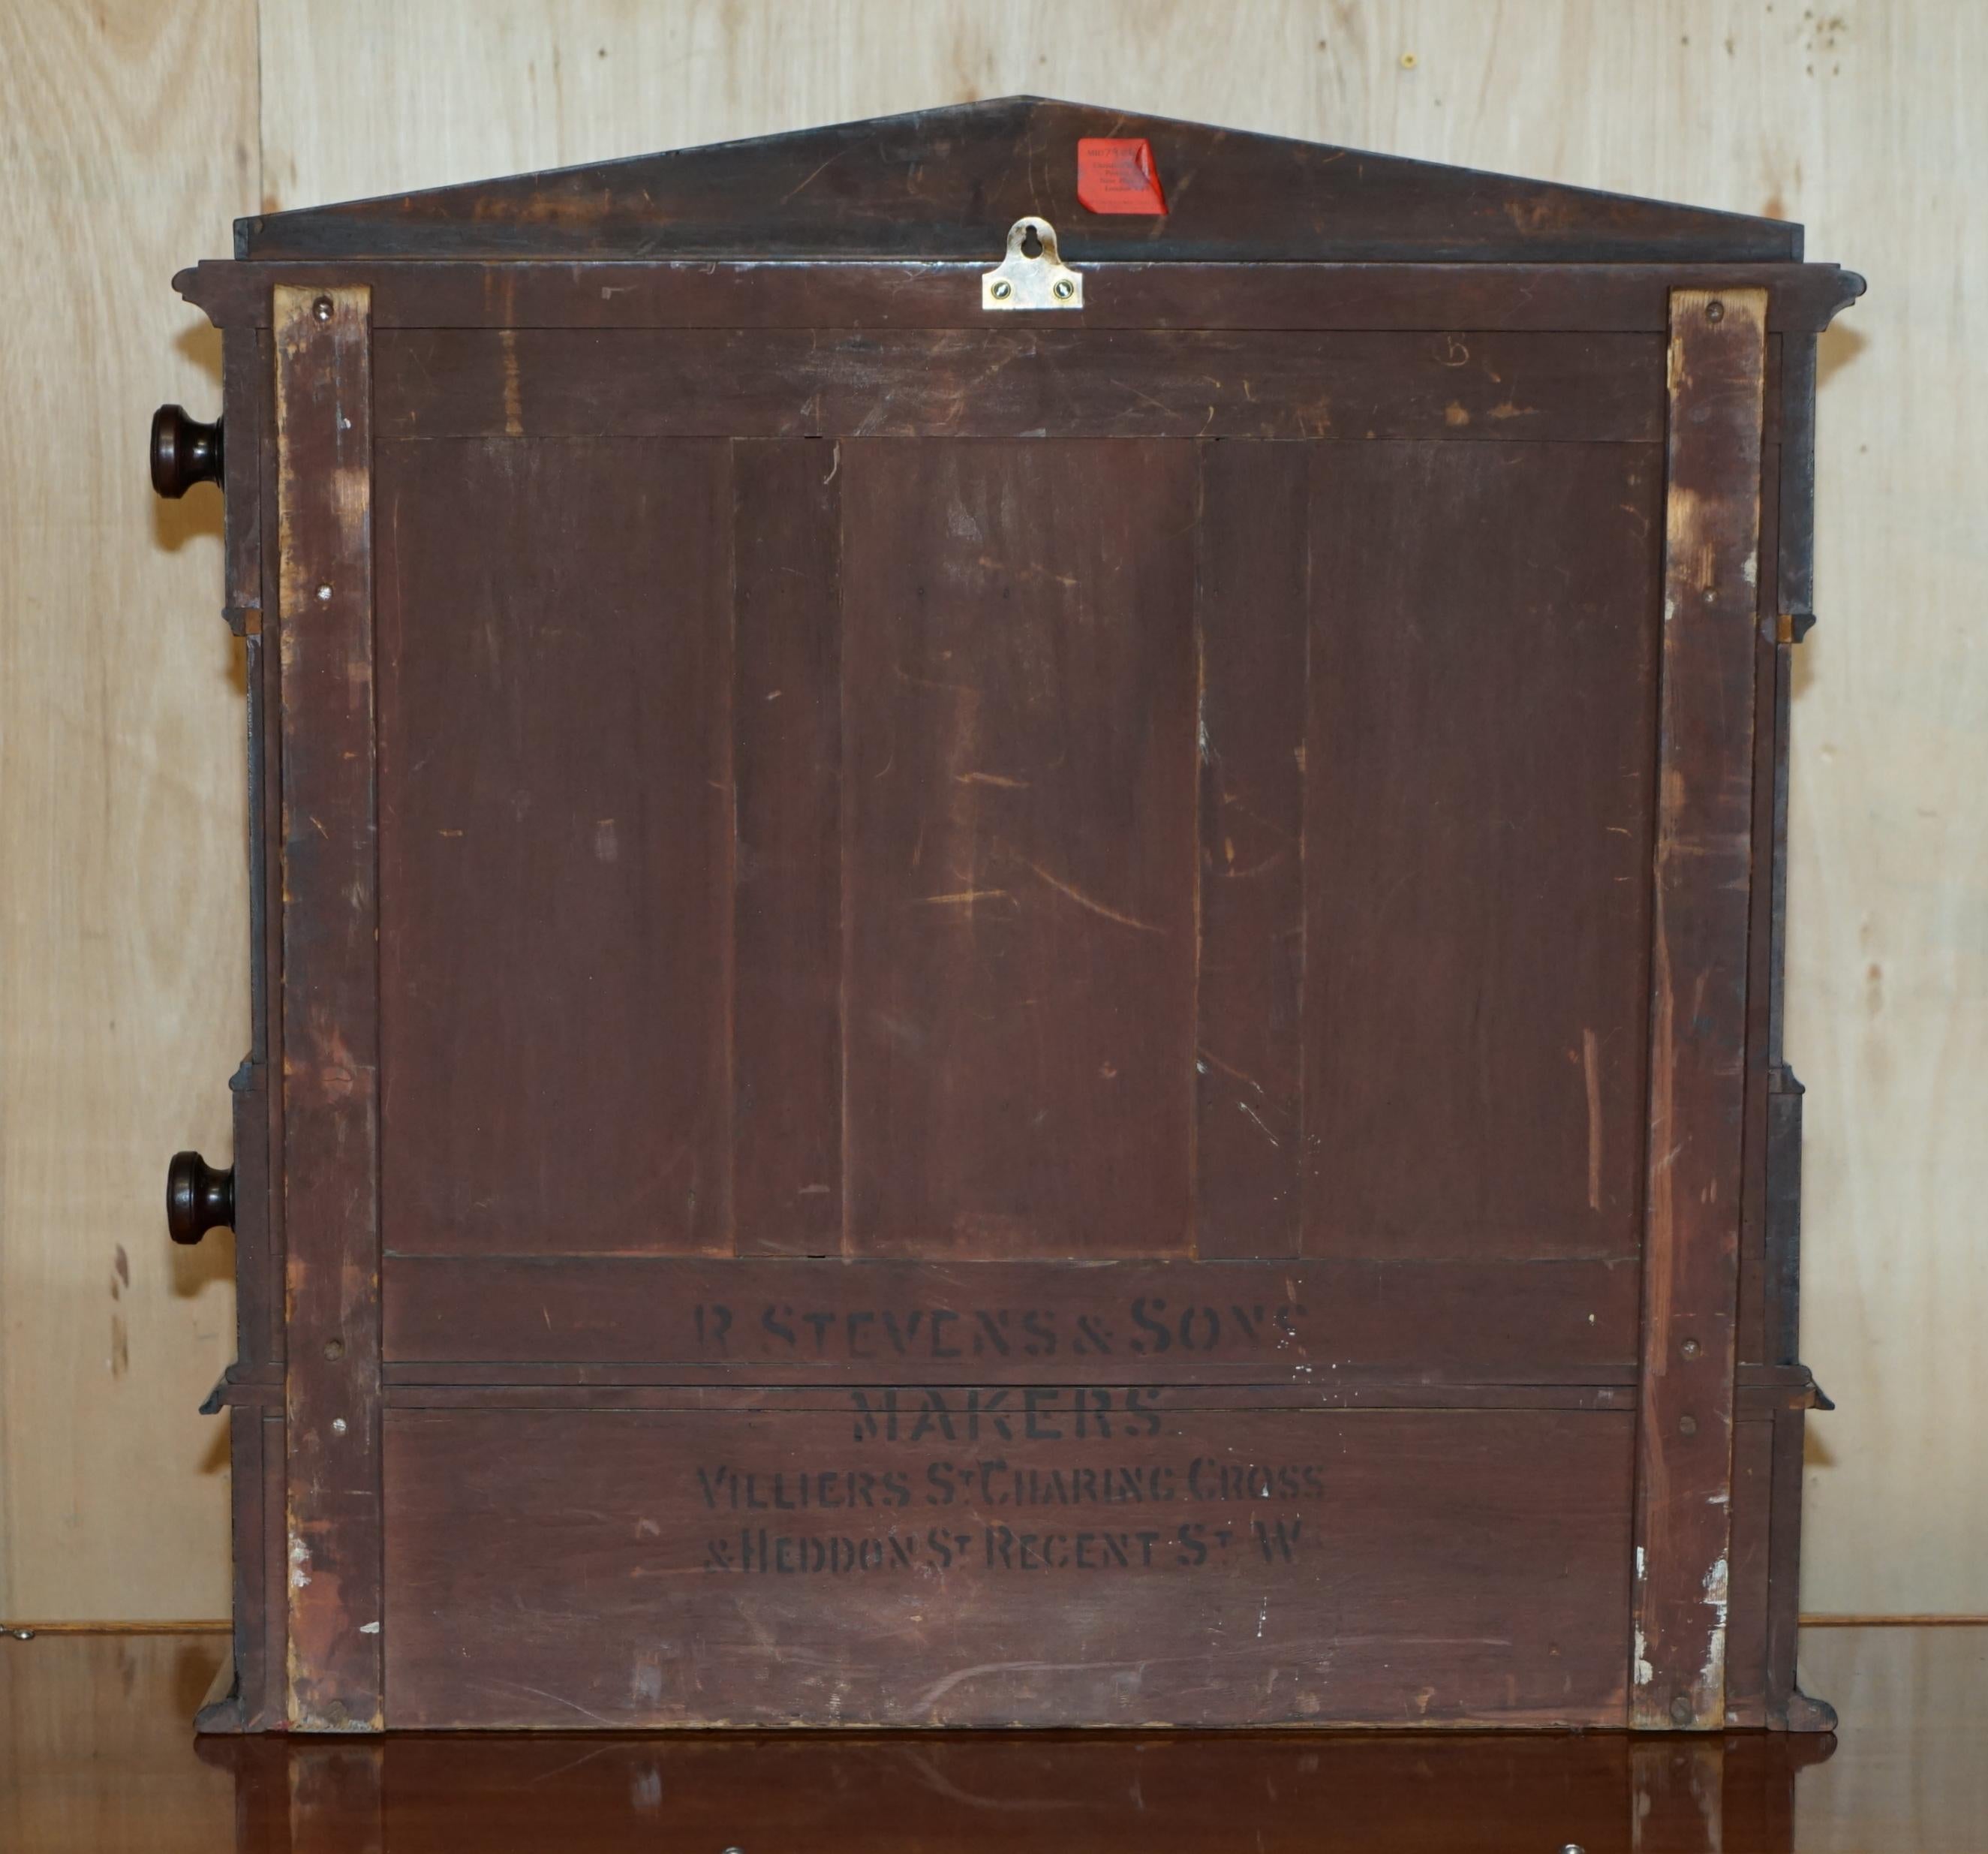 ANTIQUE ViCTORIAN STEVEN & SON'S EST 1830 REGENT STREET SNOOKER SCORE BOARD For Sale 7